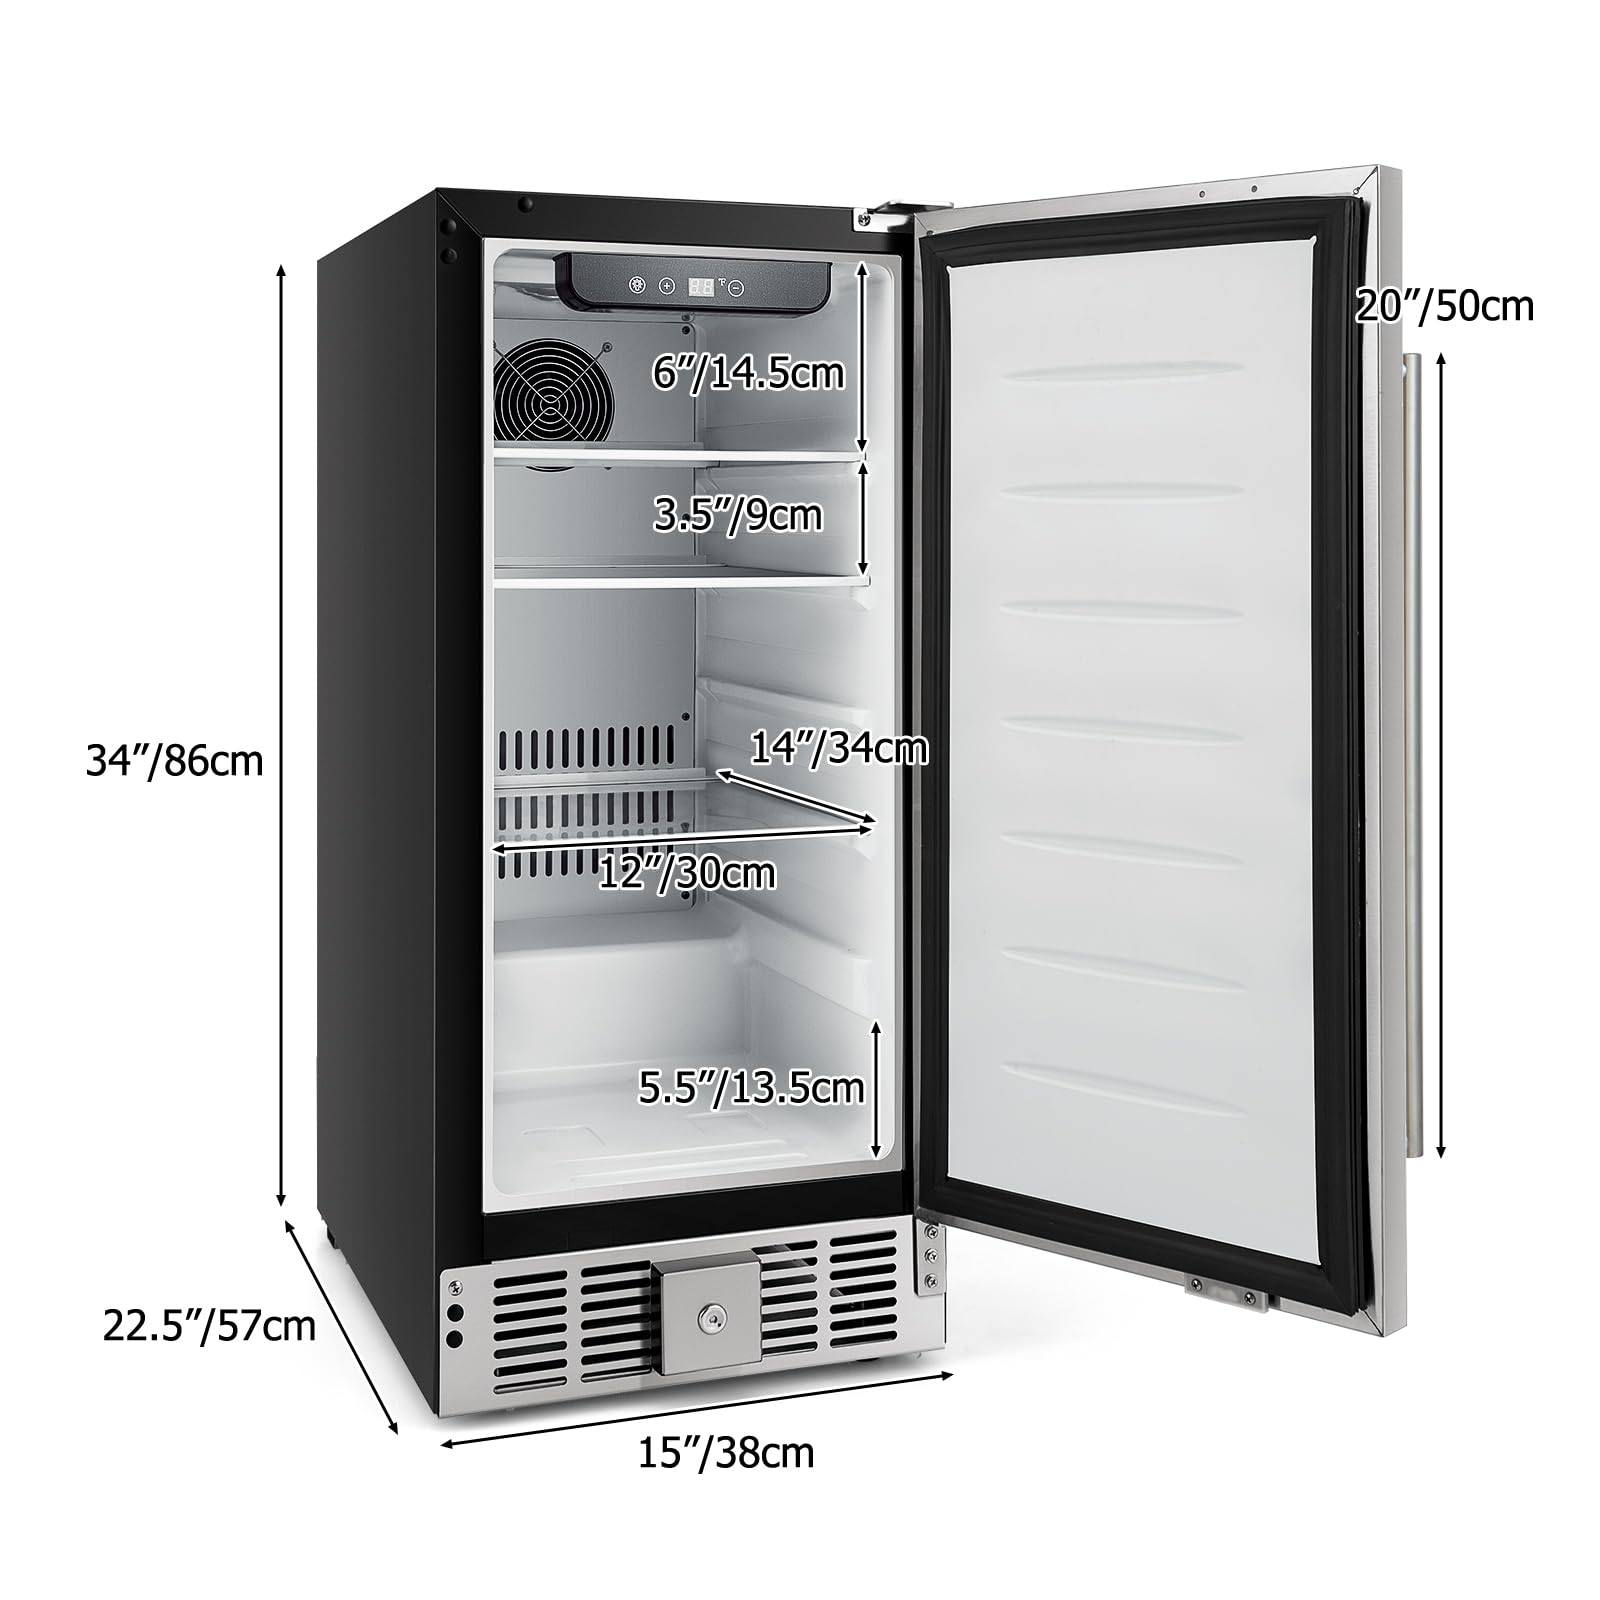 KOTEK 115 Cans Beverage Refrigerator, 32 to 50℉, Under Counter Freestanding Beverage Cooler w/Lockable Stainless Steel Door for Drinks and Food, 2.9 Cu.ft, Mini Beer Fridge for Bedroom, Dorm, Home